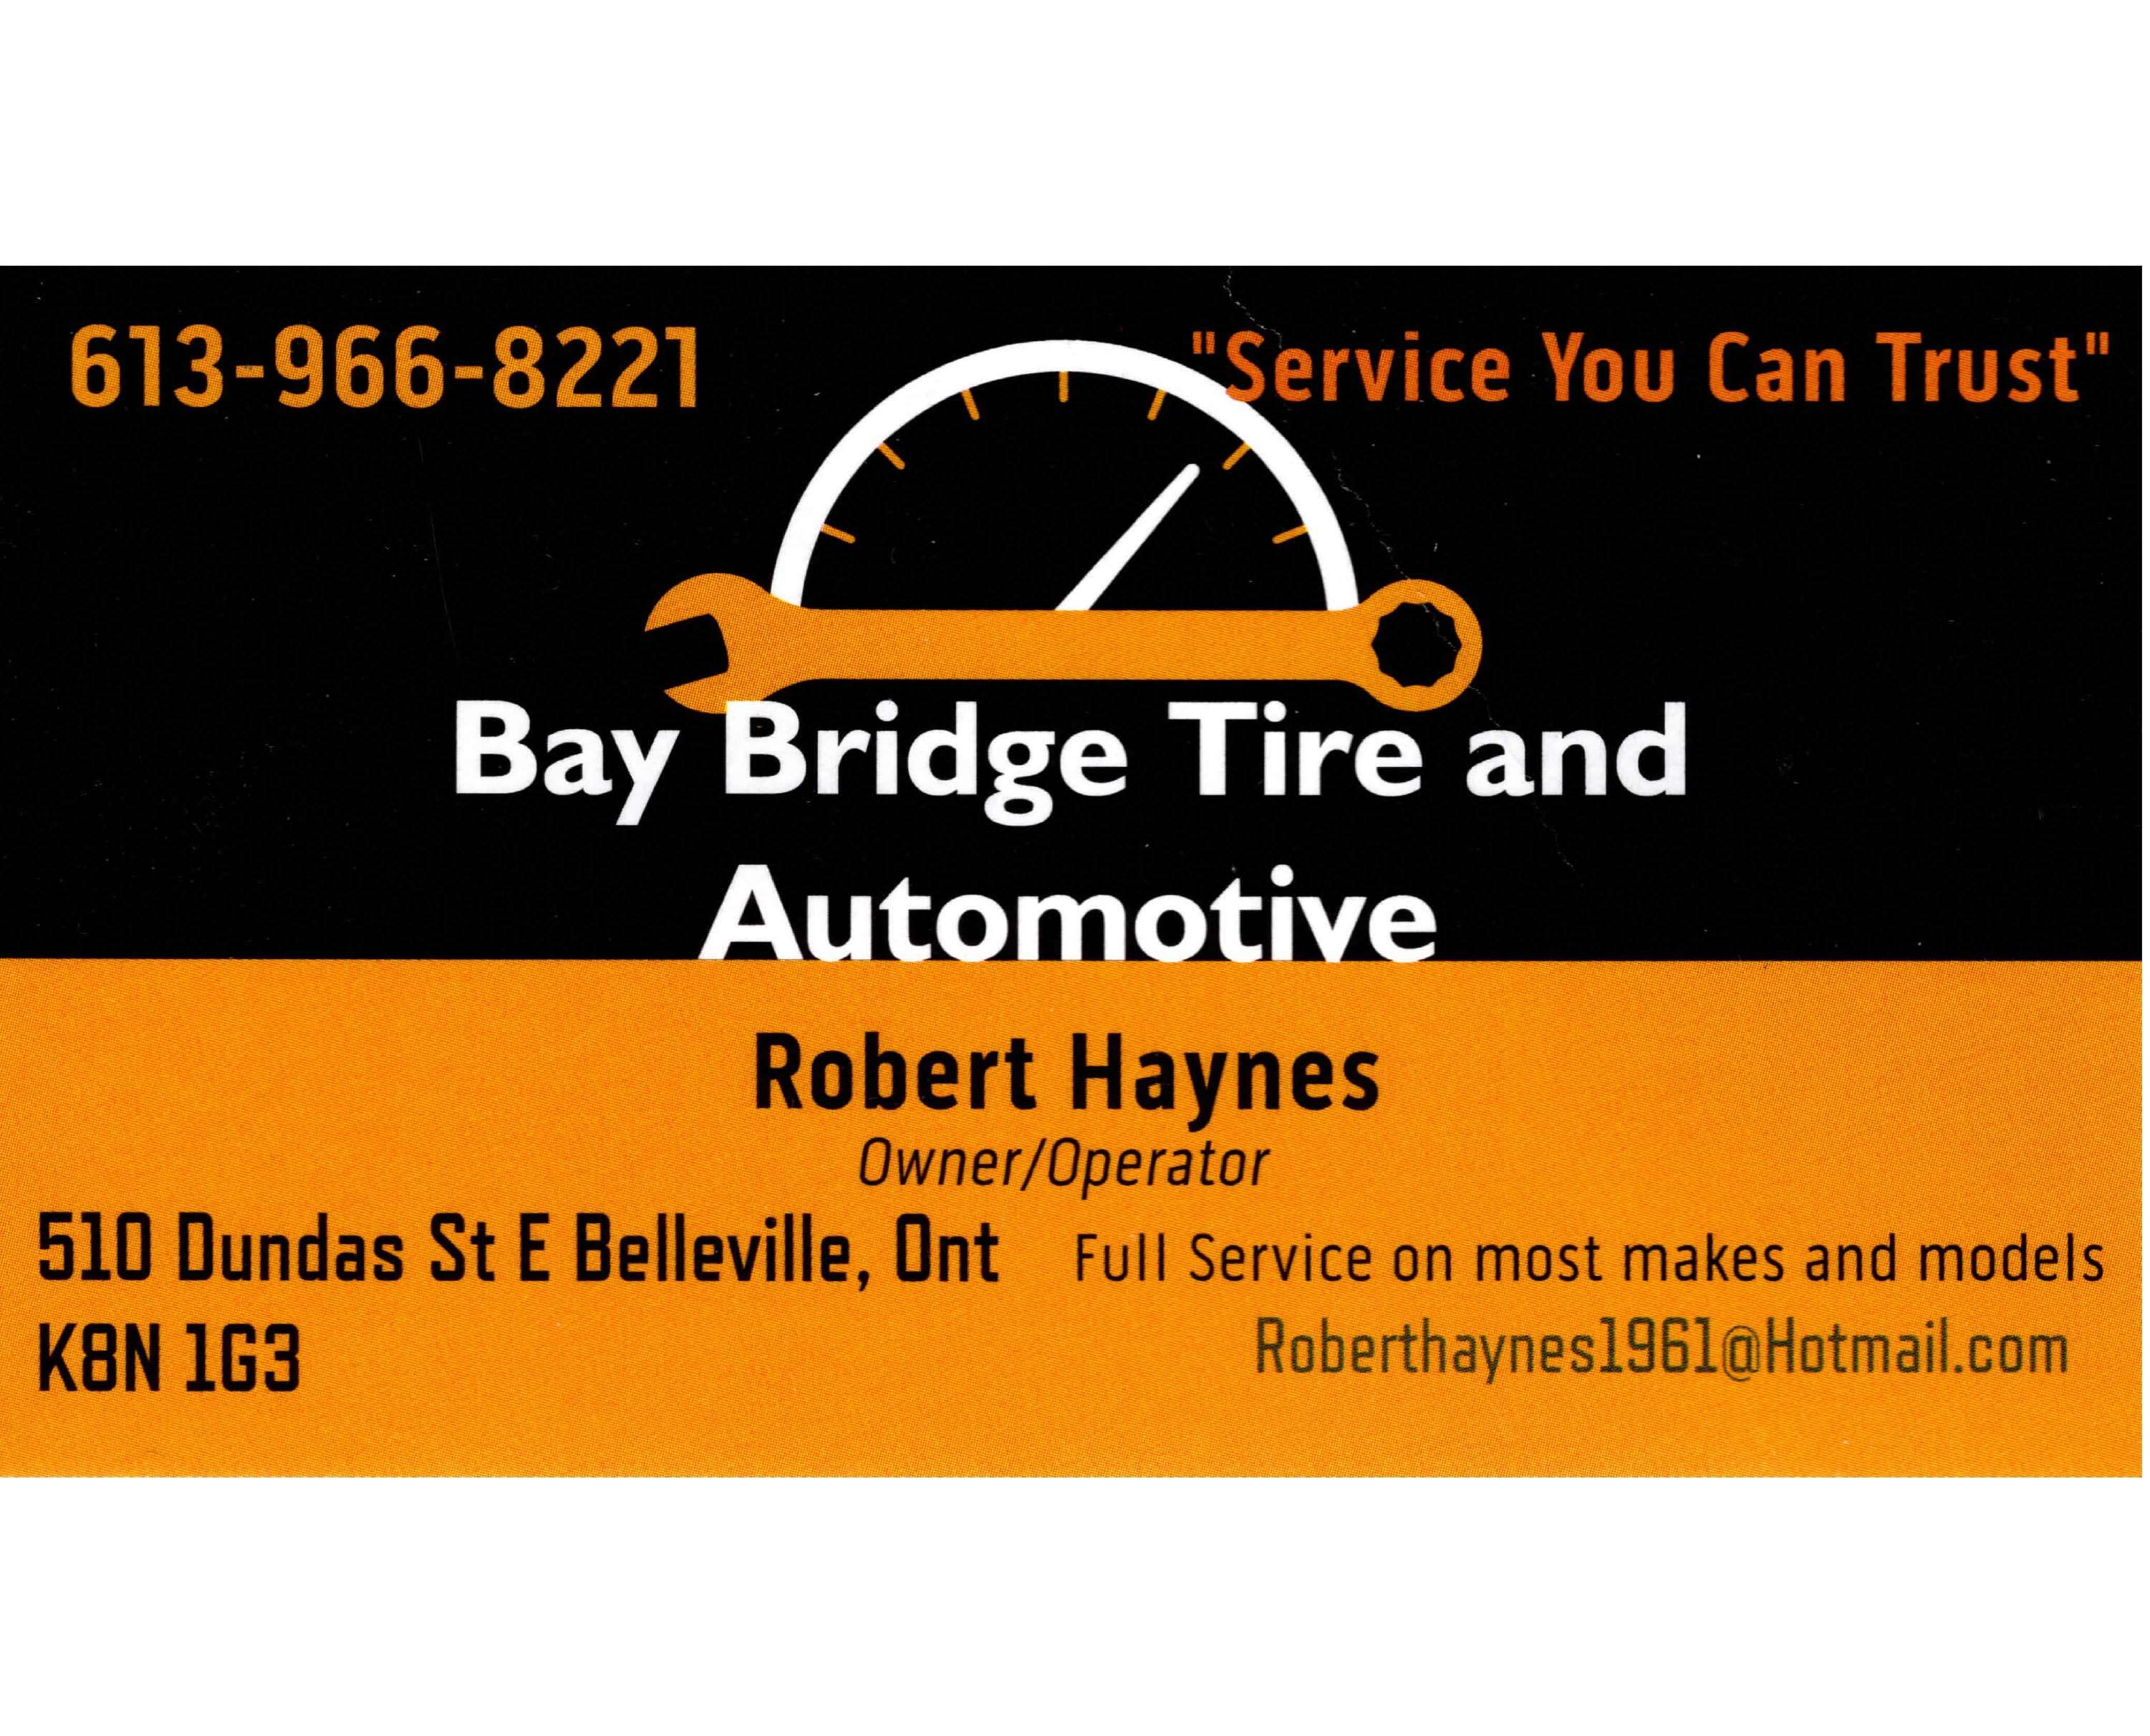 Bay Bridge Tire and Automotive